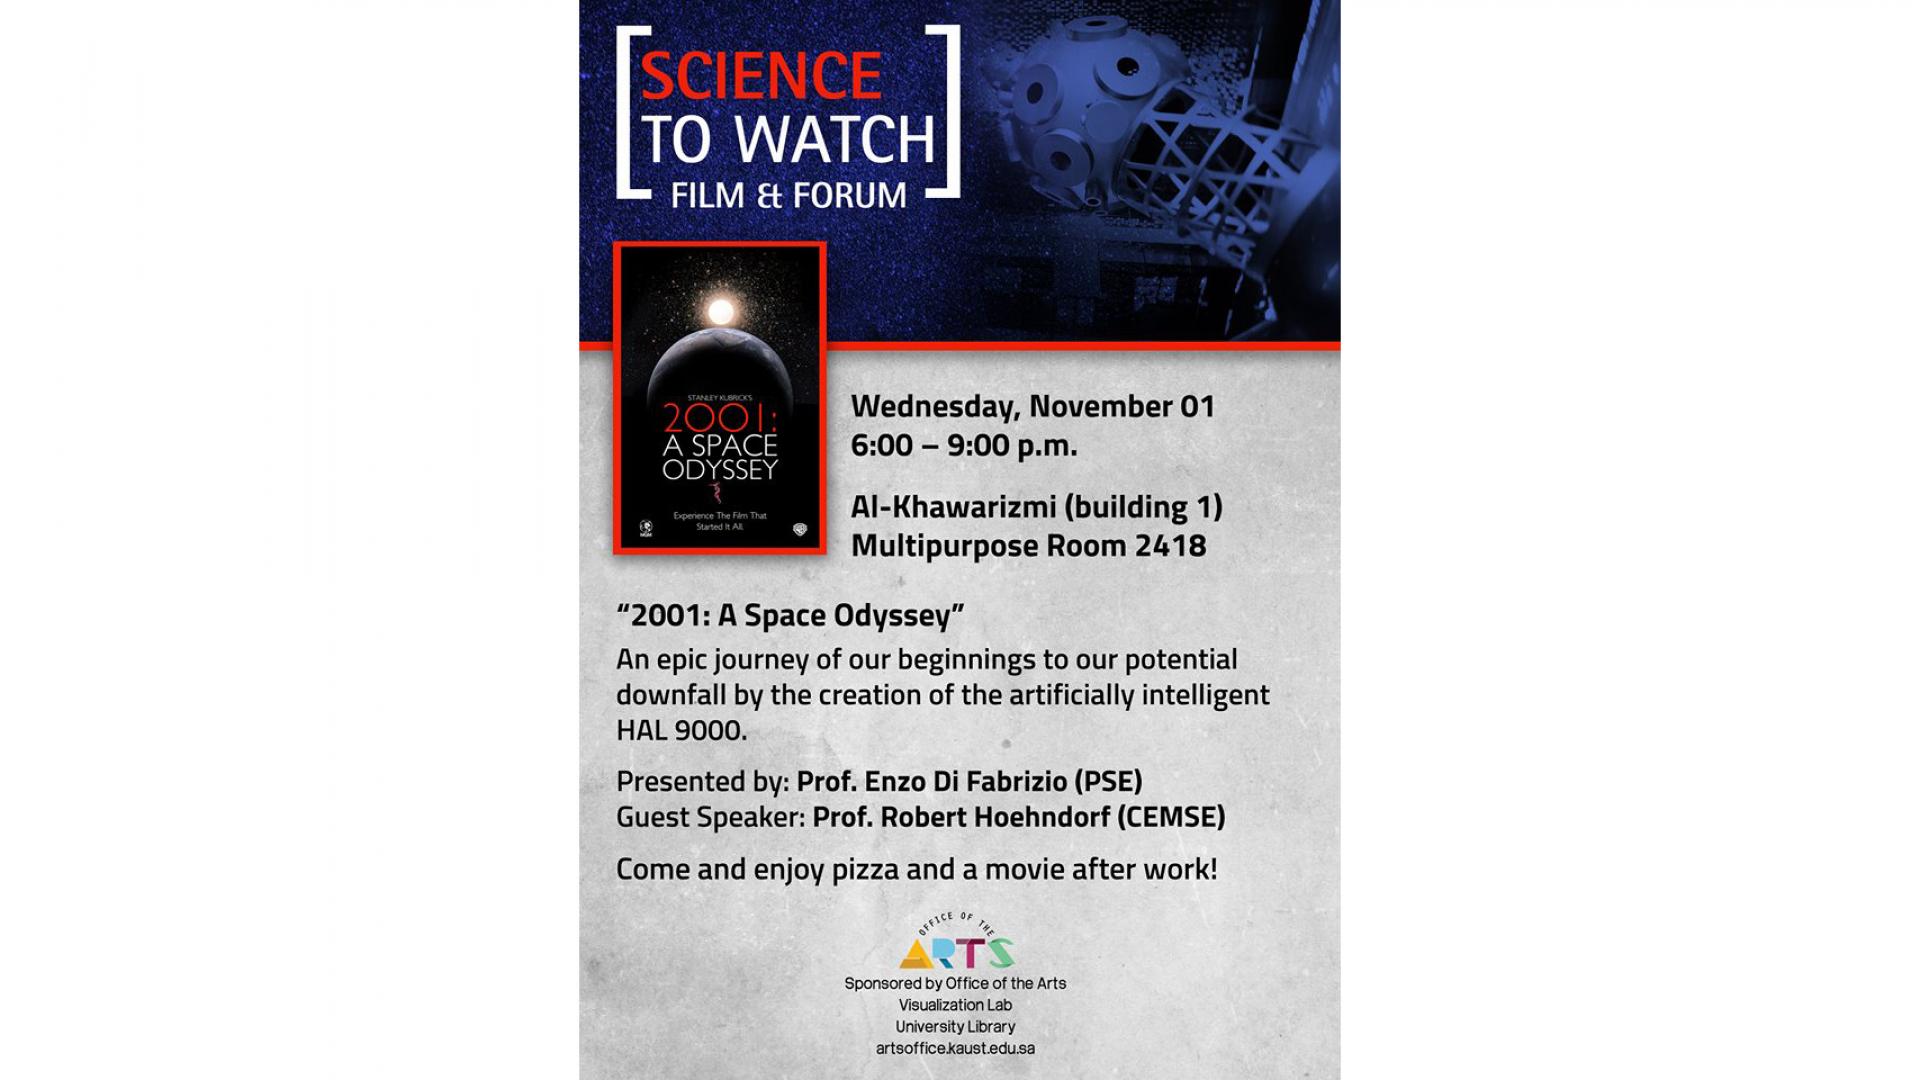 KAUST CEMSE BORG Robert Hoehndorf guest speaker science to watch